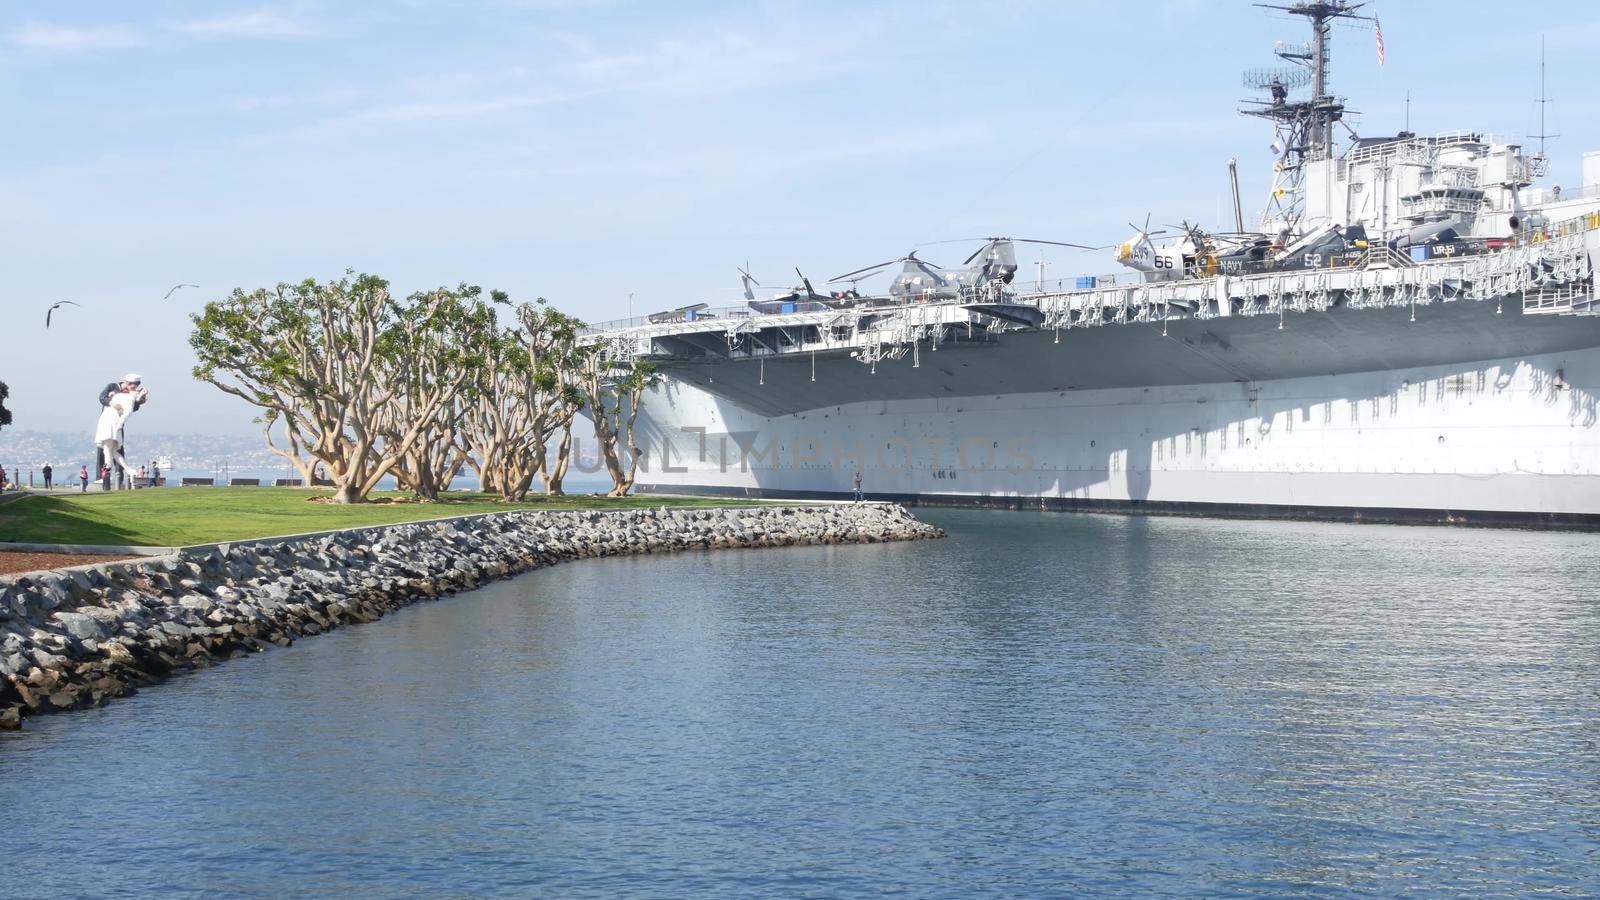 SAN DIEGO, CALIFORNIA USA - 15 JAN 2020: USS Midway military aircraft carrier, historic war ship. Naval army battleship. Maritime warship, legend of navy fleet near Unconditional Surrender Statue.